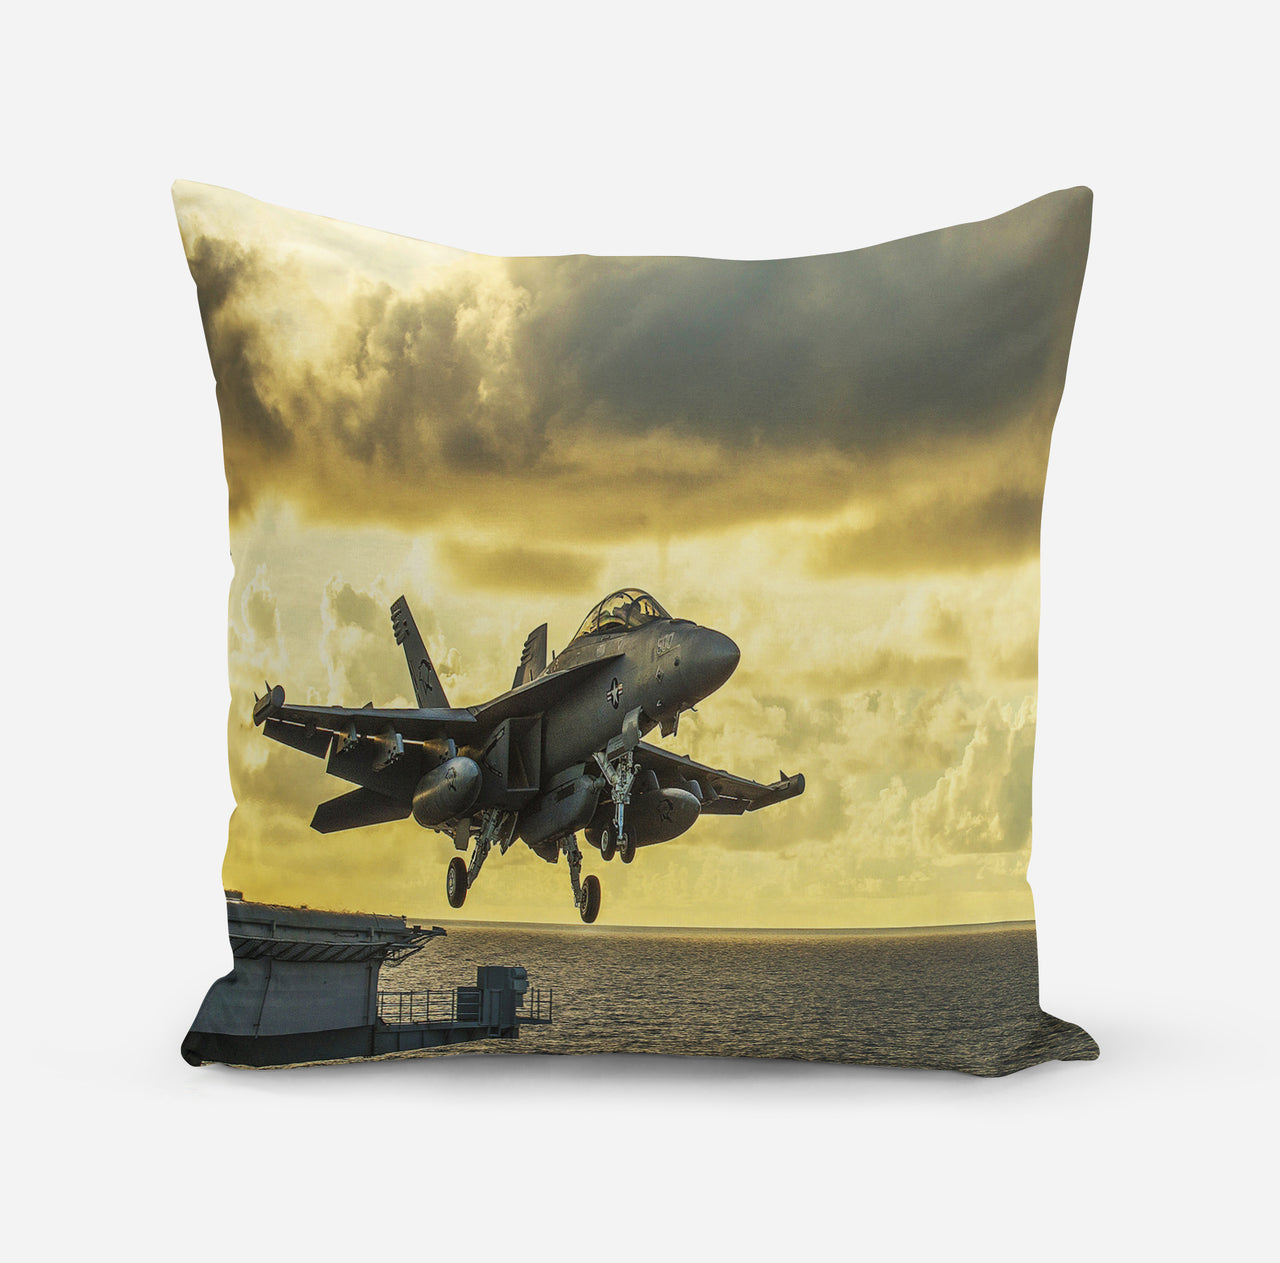 Departing Jet Aircraft Designed Pillows